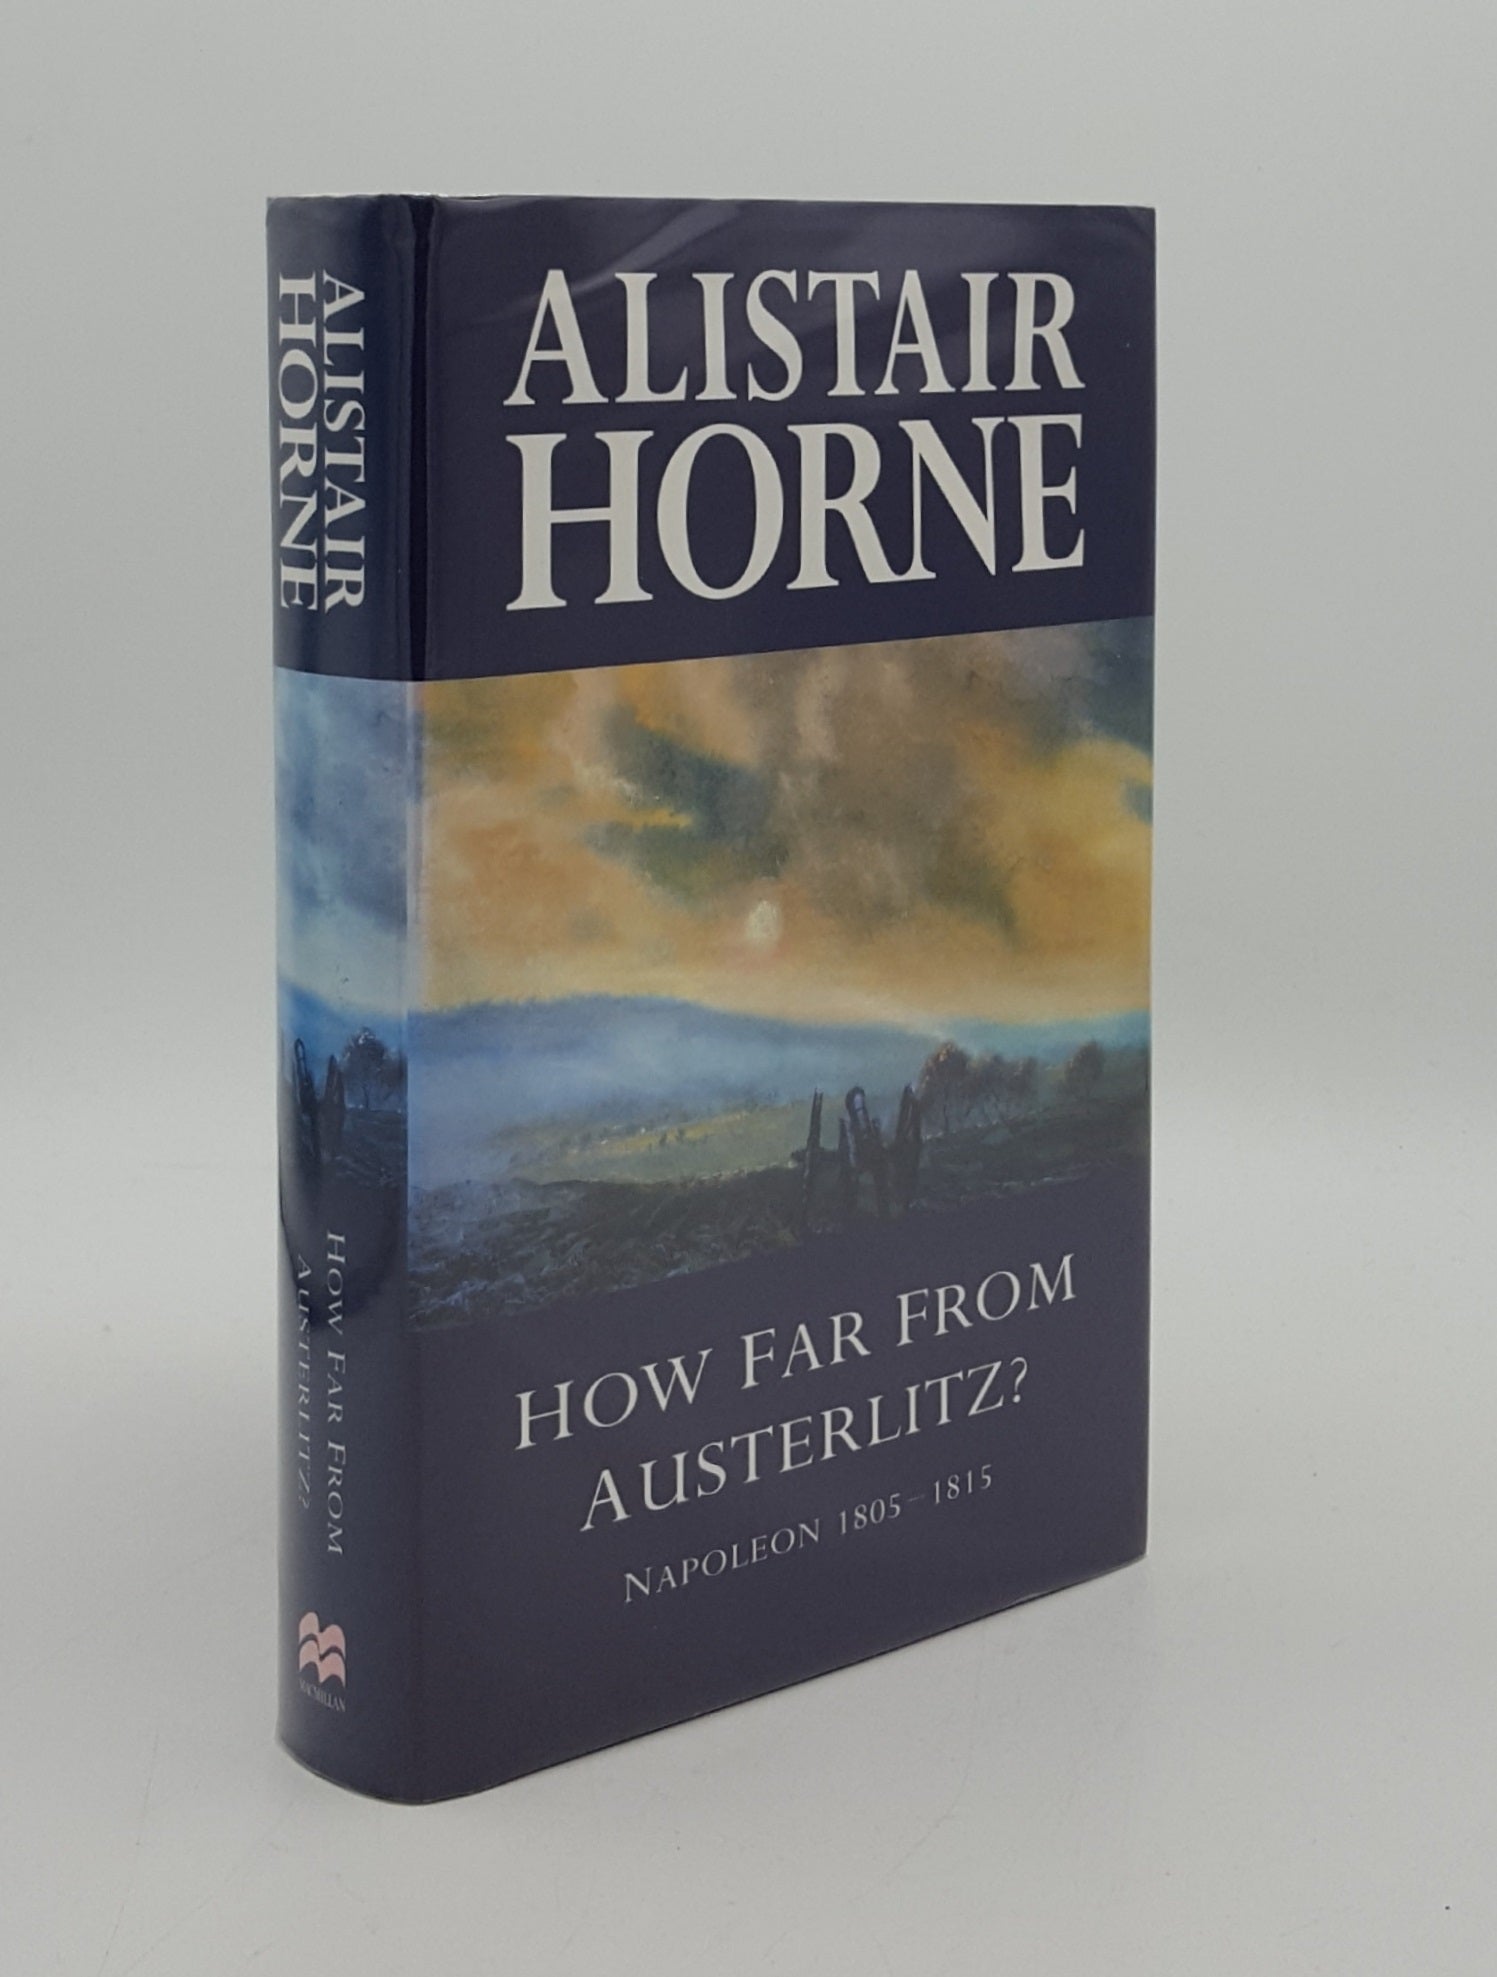 HORNE Alistair - How Far from Austerlitz? Napoleon 1805-1815